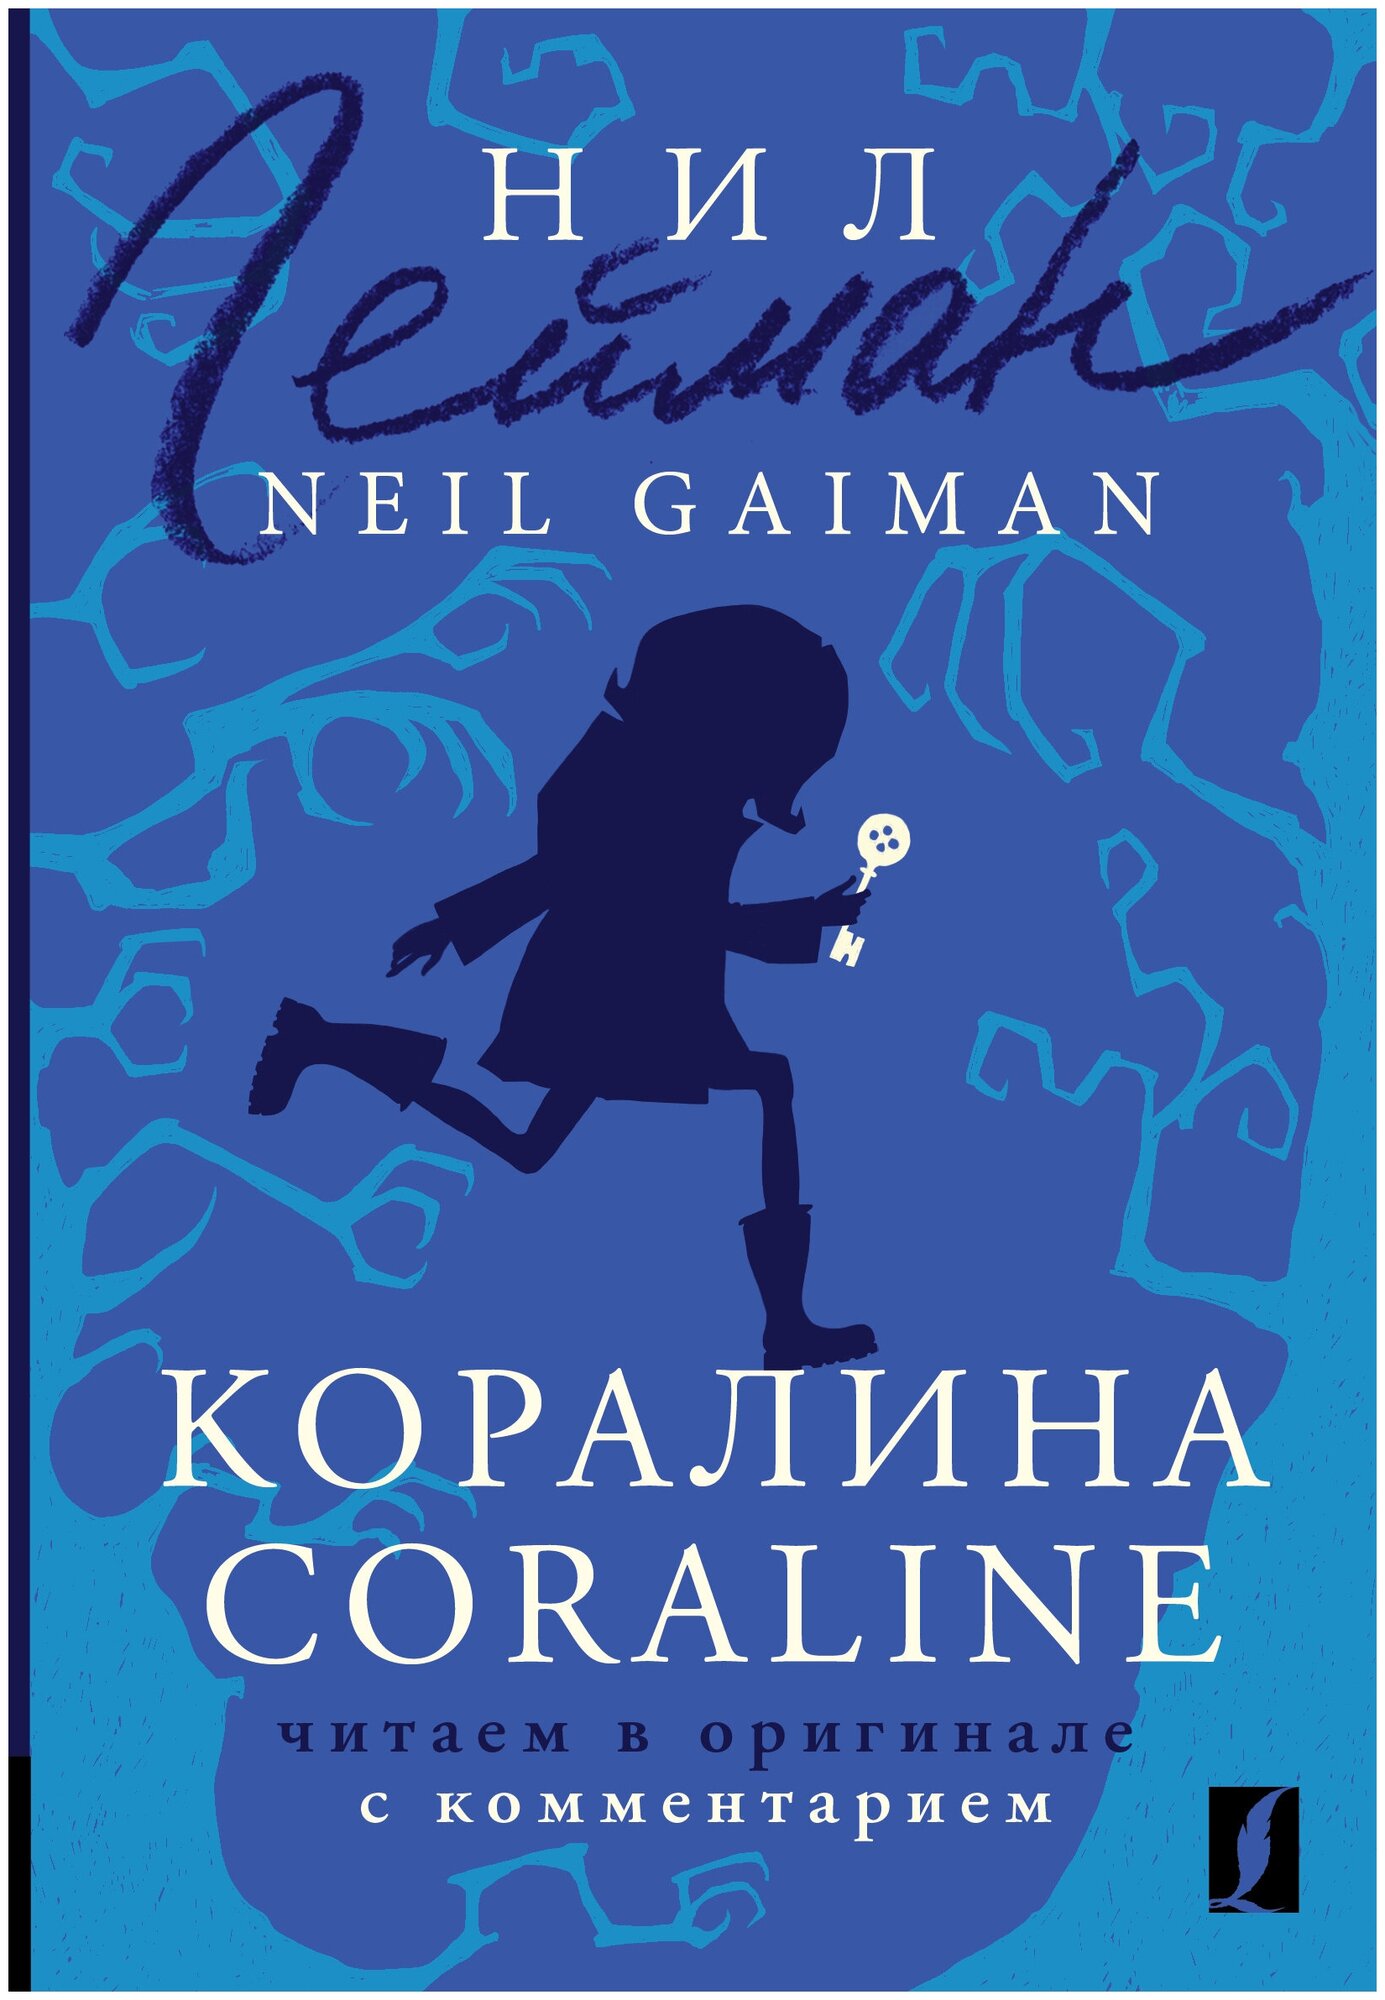 Коралина Coraline читаем в оригинале с комментарием Книга Гейман Нил 12+